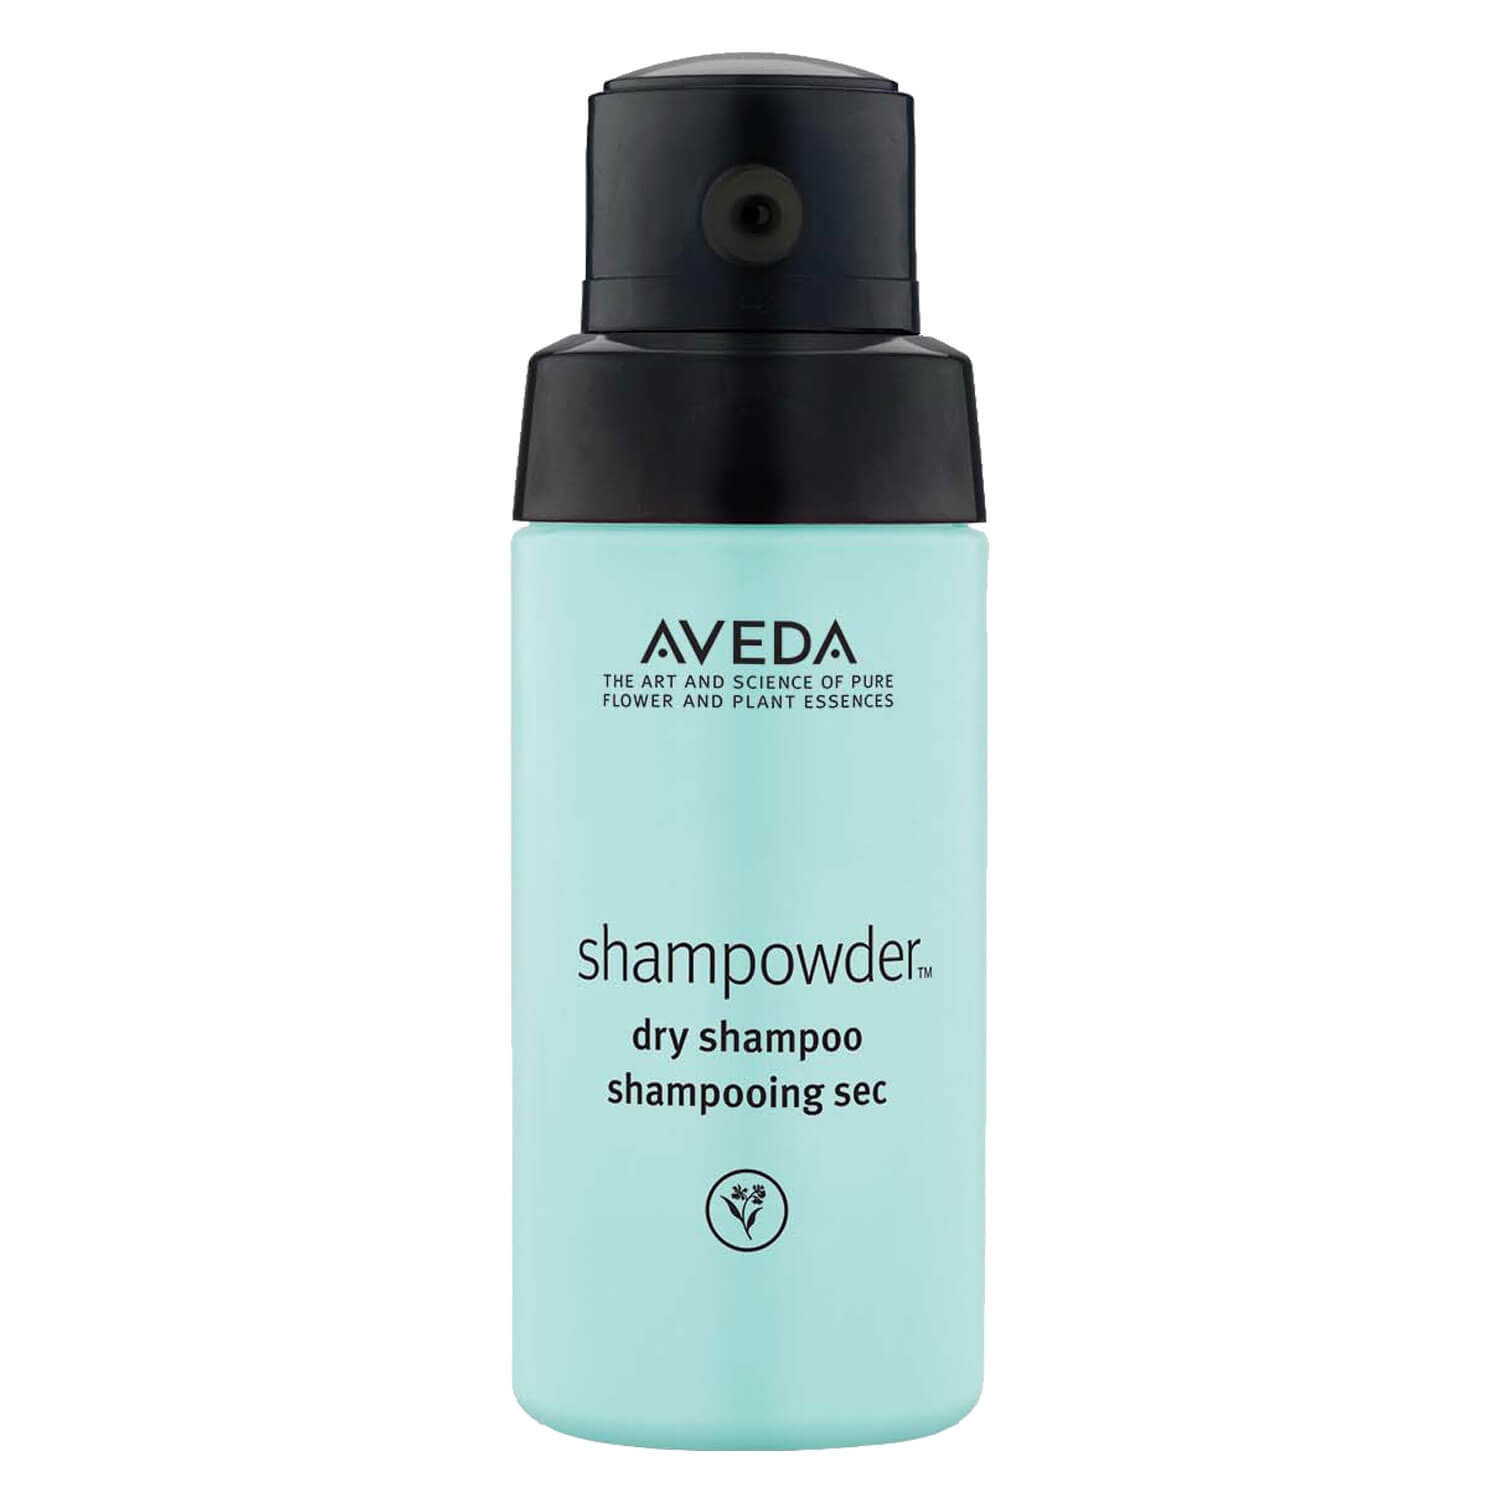 Image du produit de shampure - shampowder dry shampoo